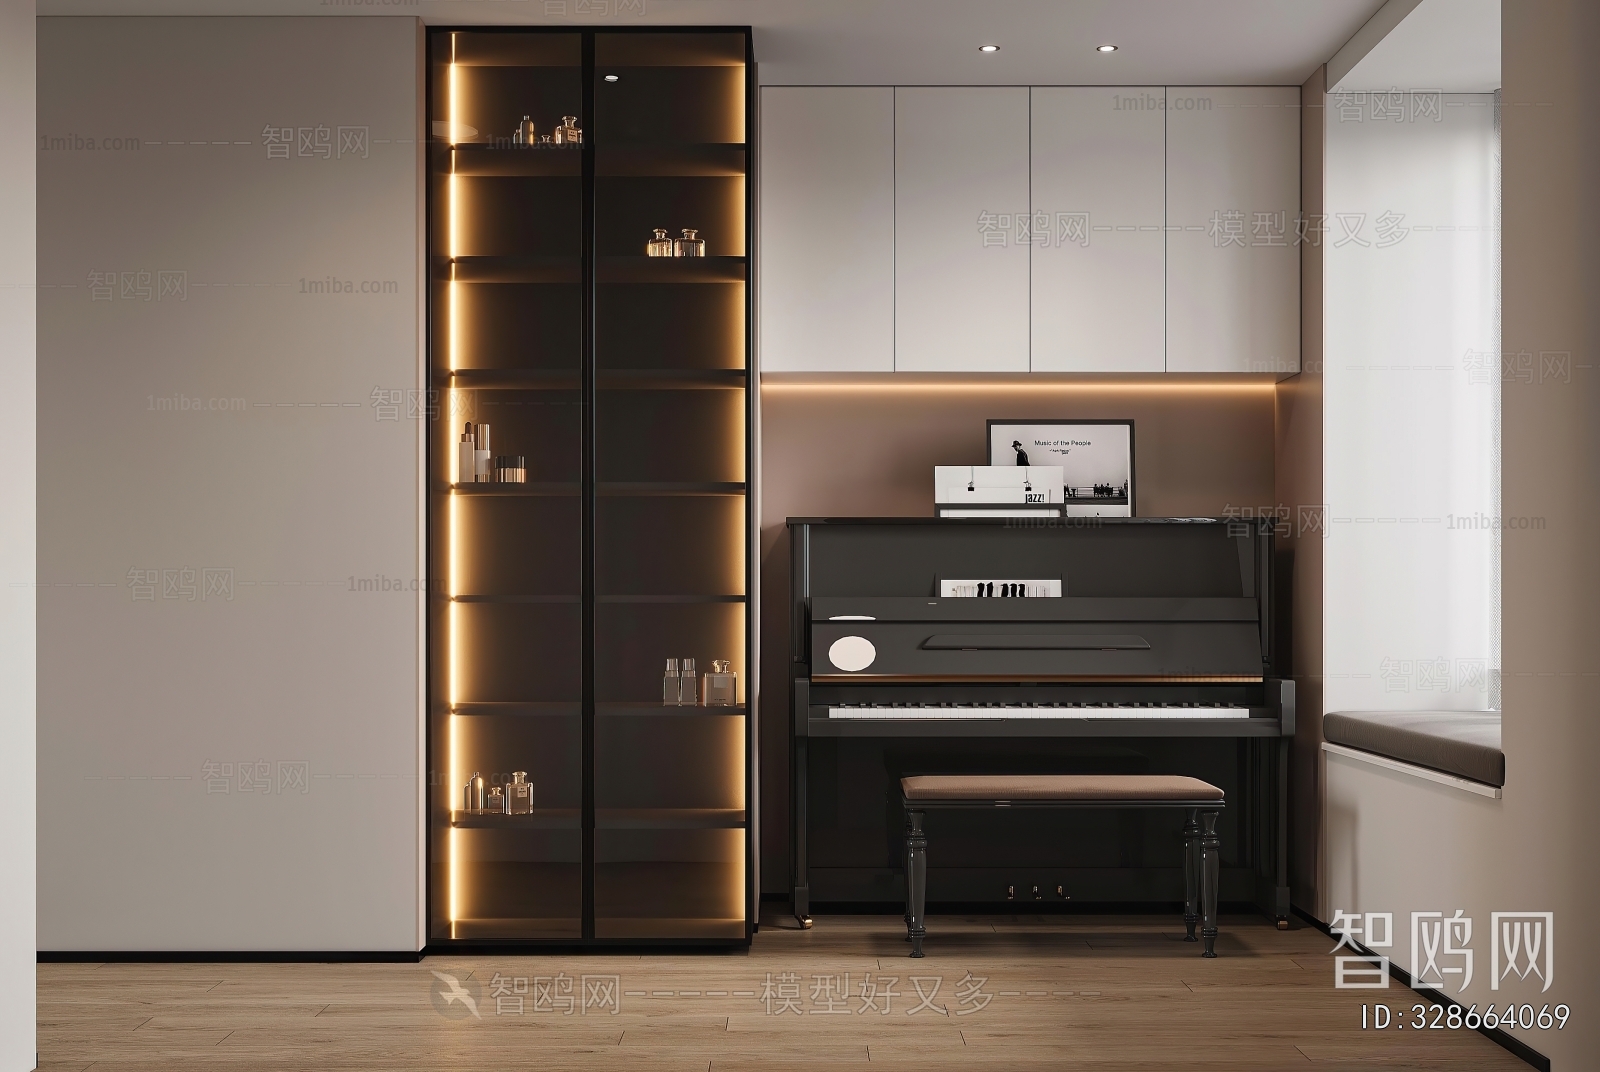 Modern Piano Room